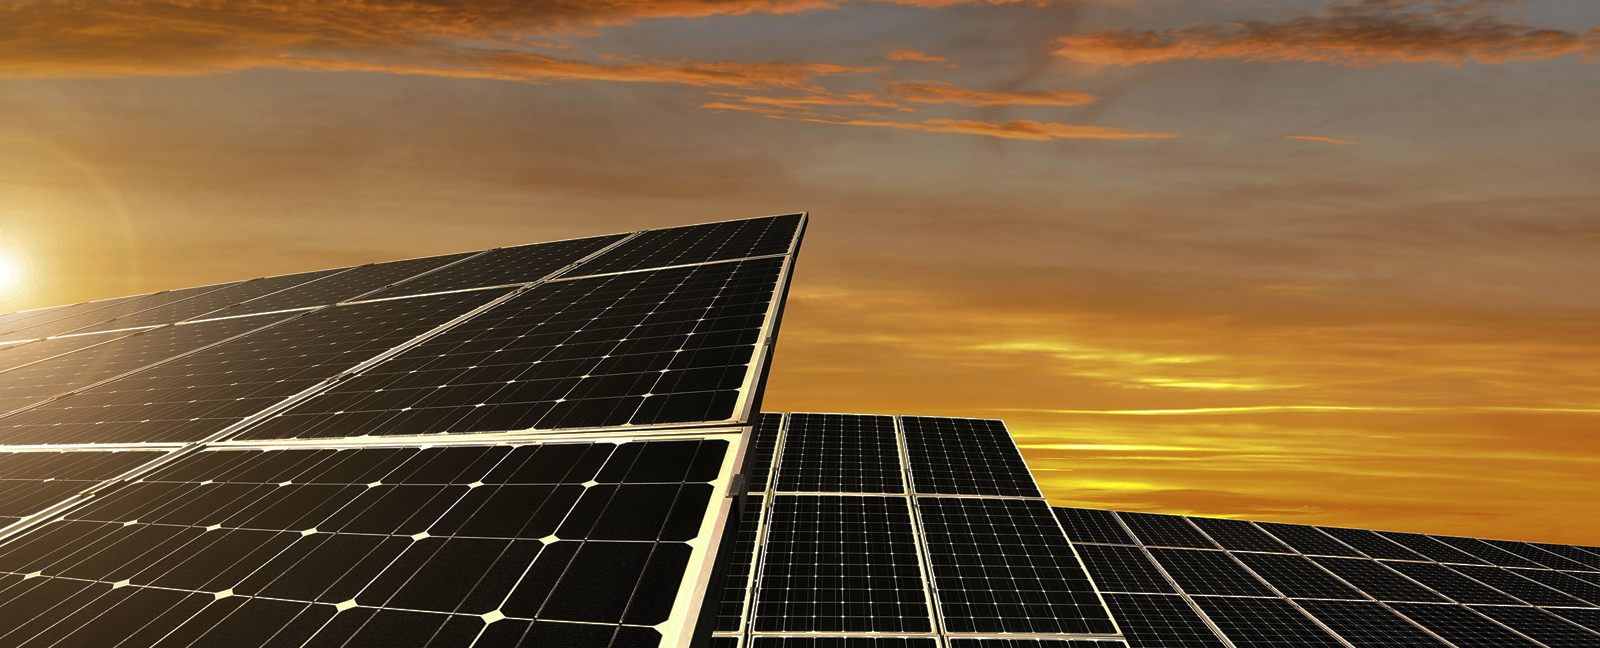 Solar panels, sunset. Photo credit: vencavolrab / iStock